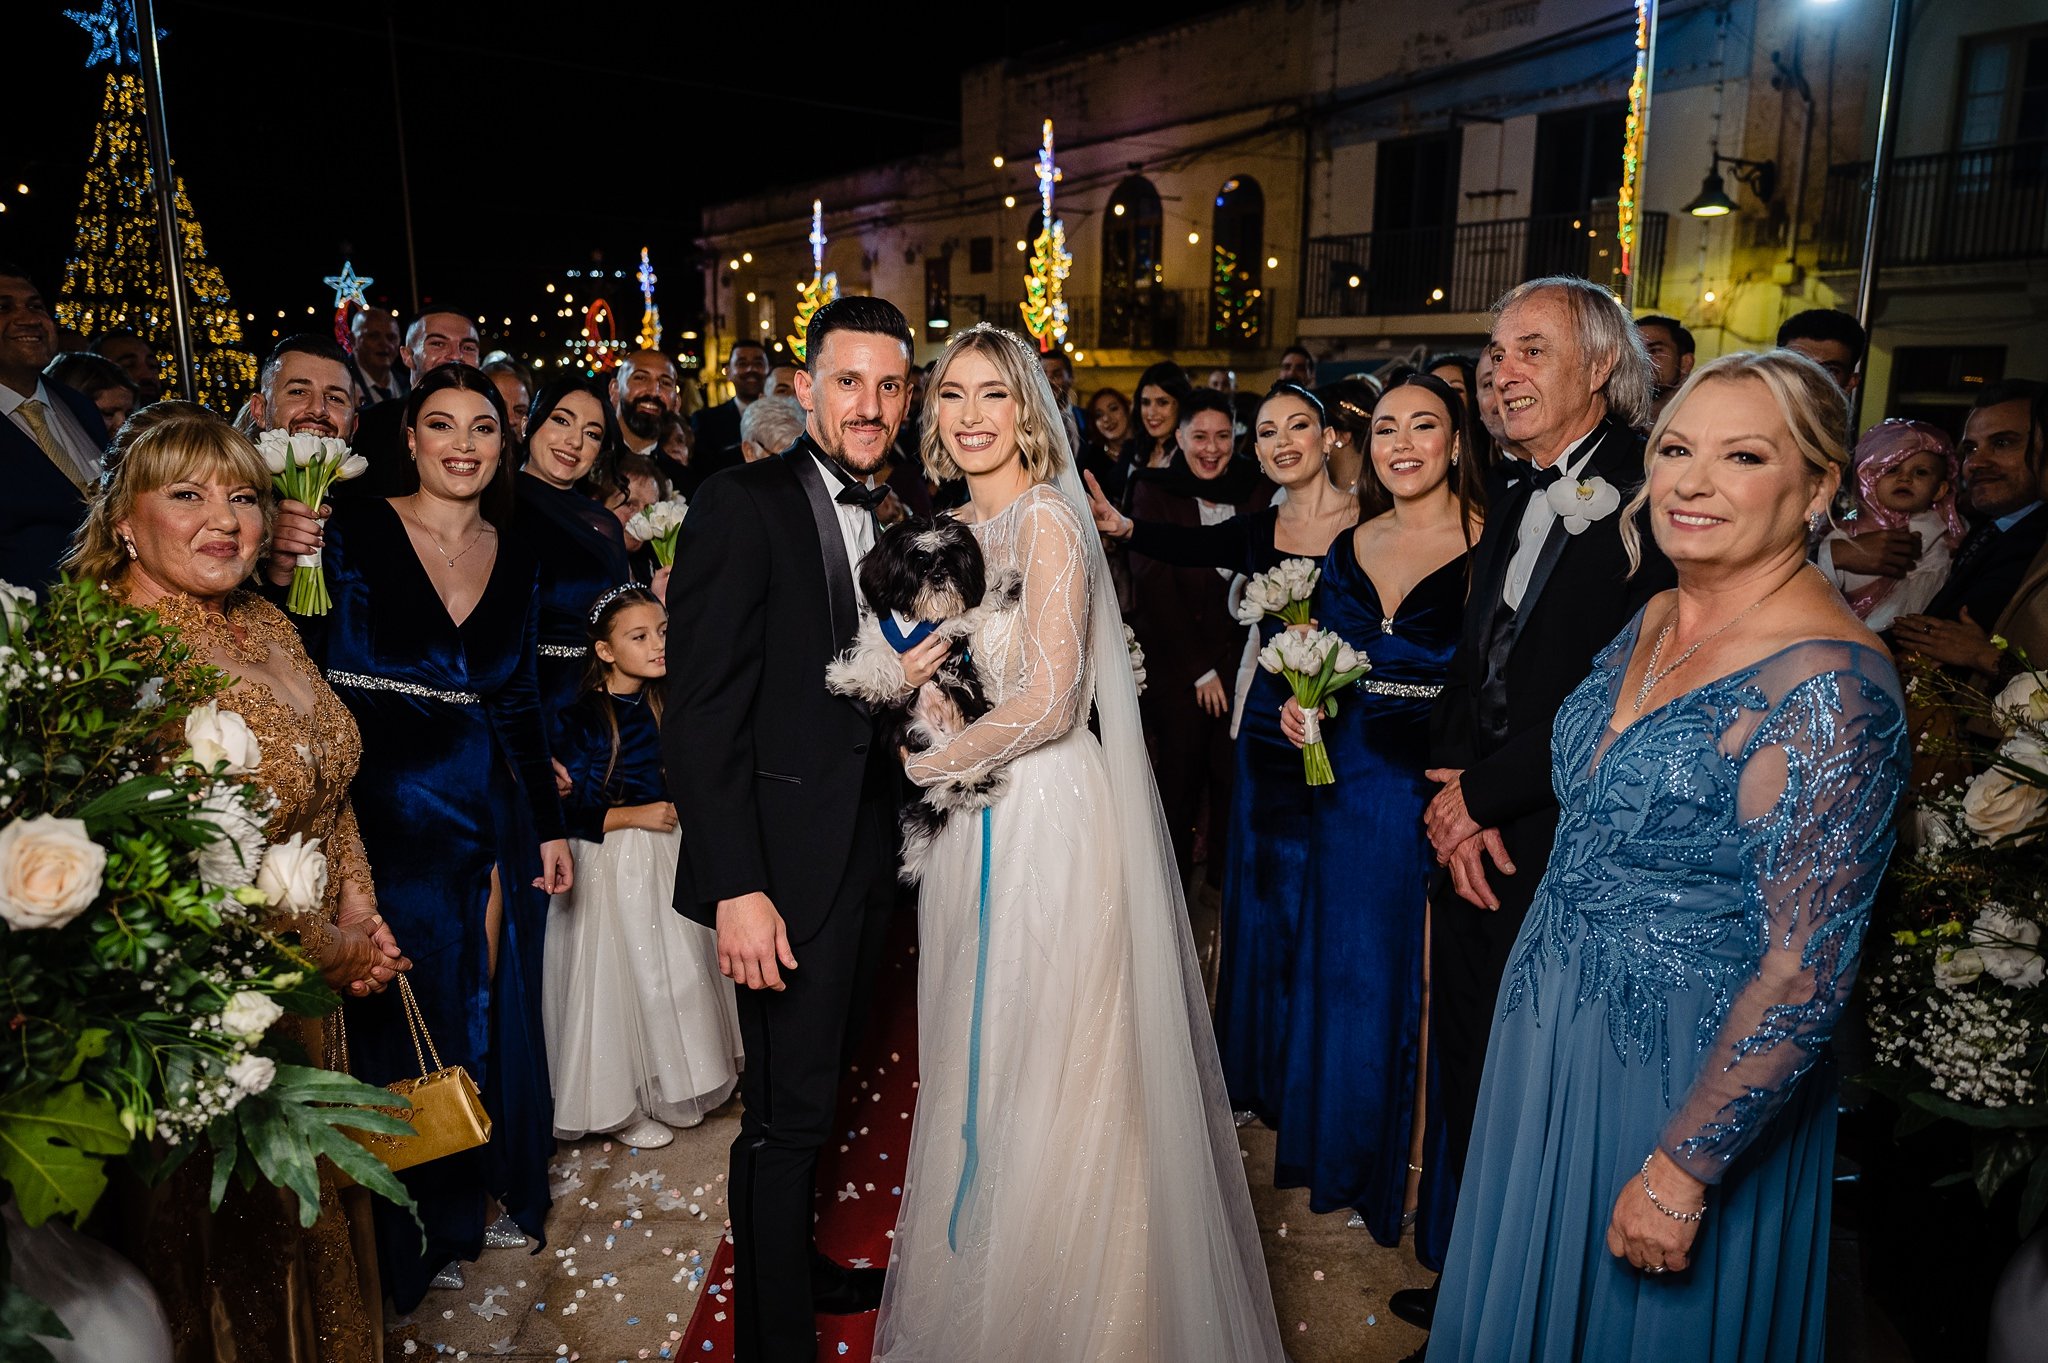 Kimberly & Jean Claude Wedding's wedding at Villa Arrigo_0076.jpg